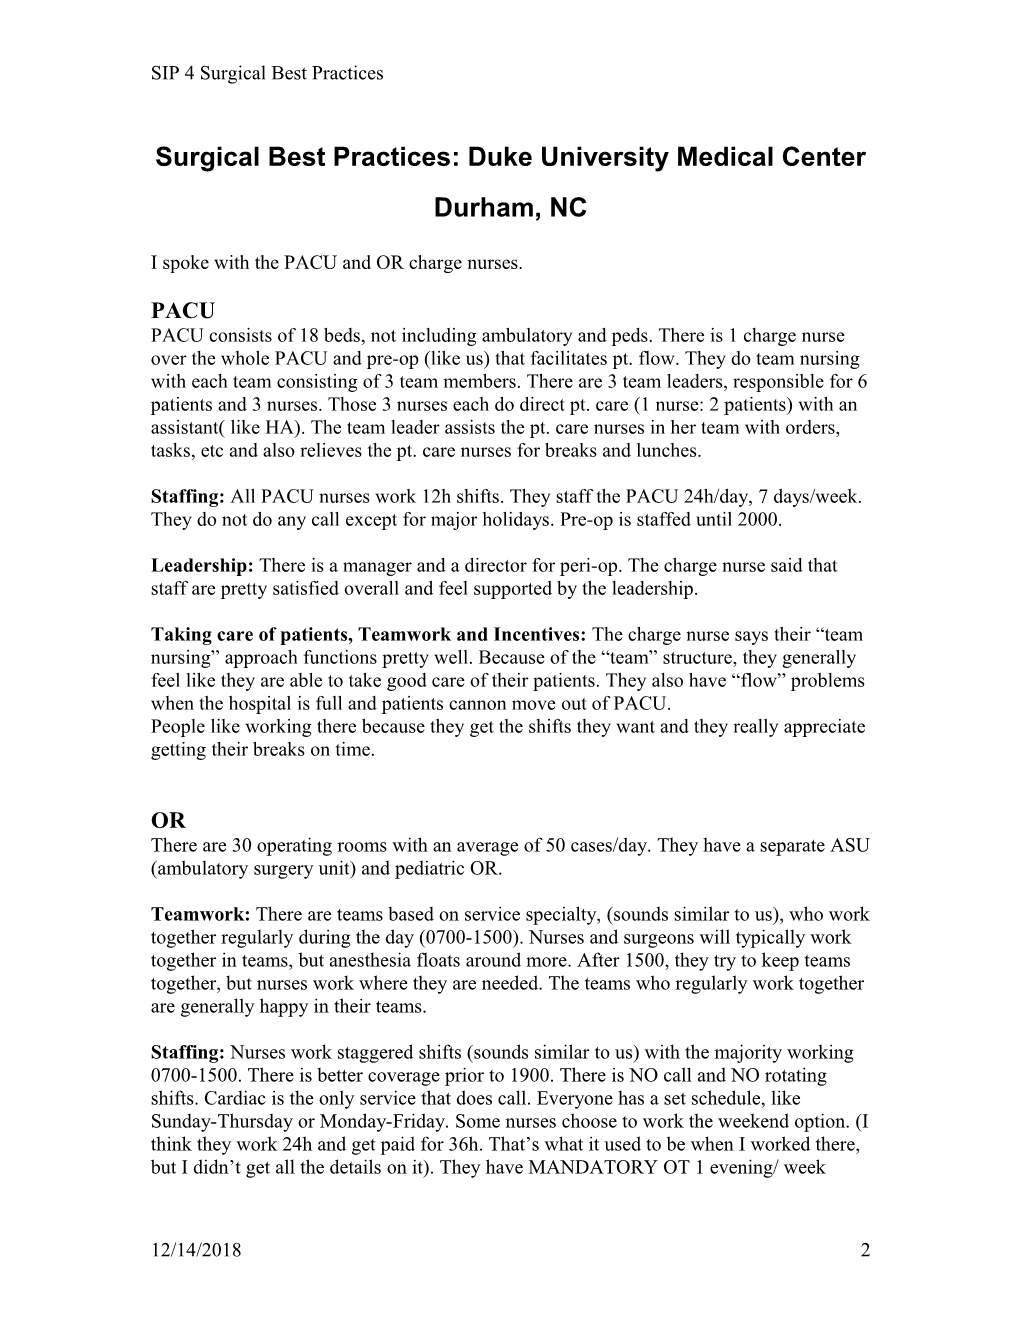 Surgical Best Practices: Duke University Medical Center